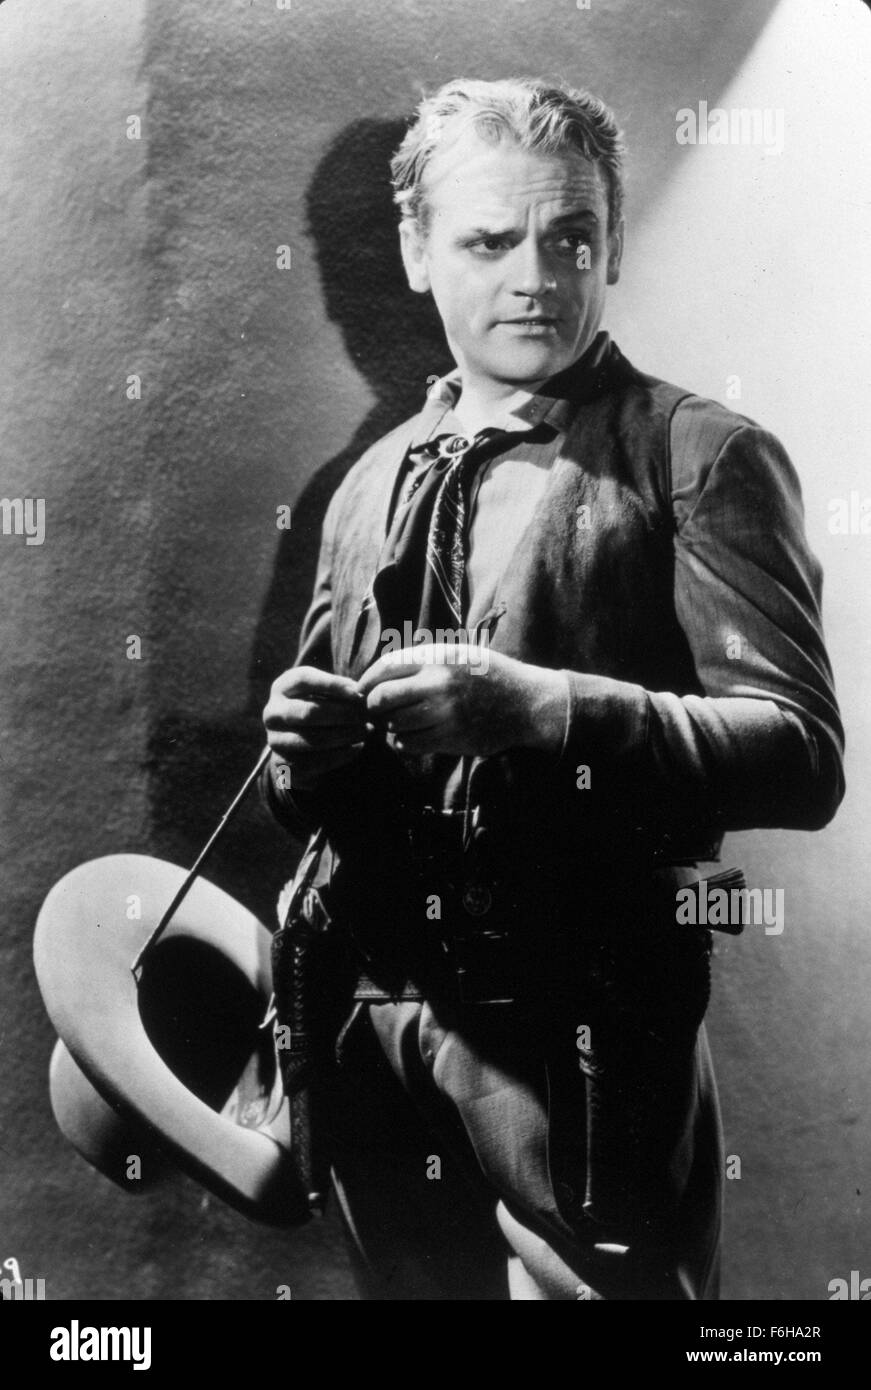 1939, Filmtitel: OKLAHOMA KID, im Bild: JAMES CAGNEY, Kleidung. (Bild Kredit: SNAP) Stockfoto